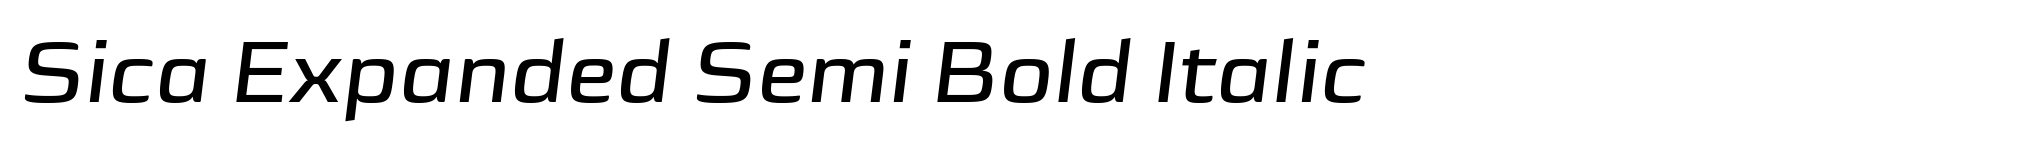 Sica Expanded Semi Bold Italic image